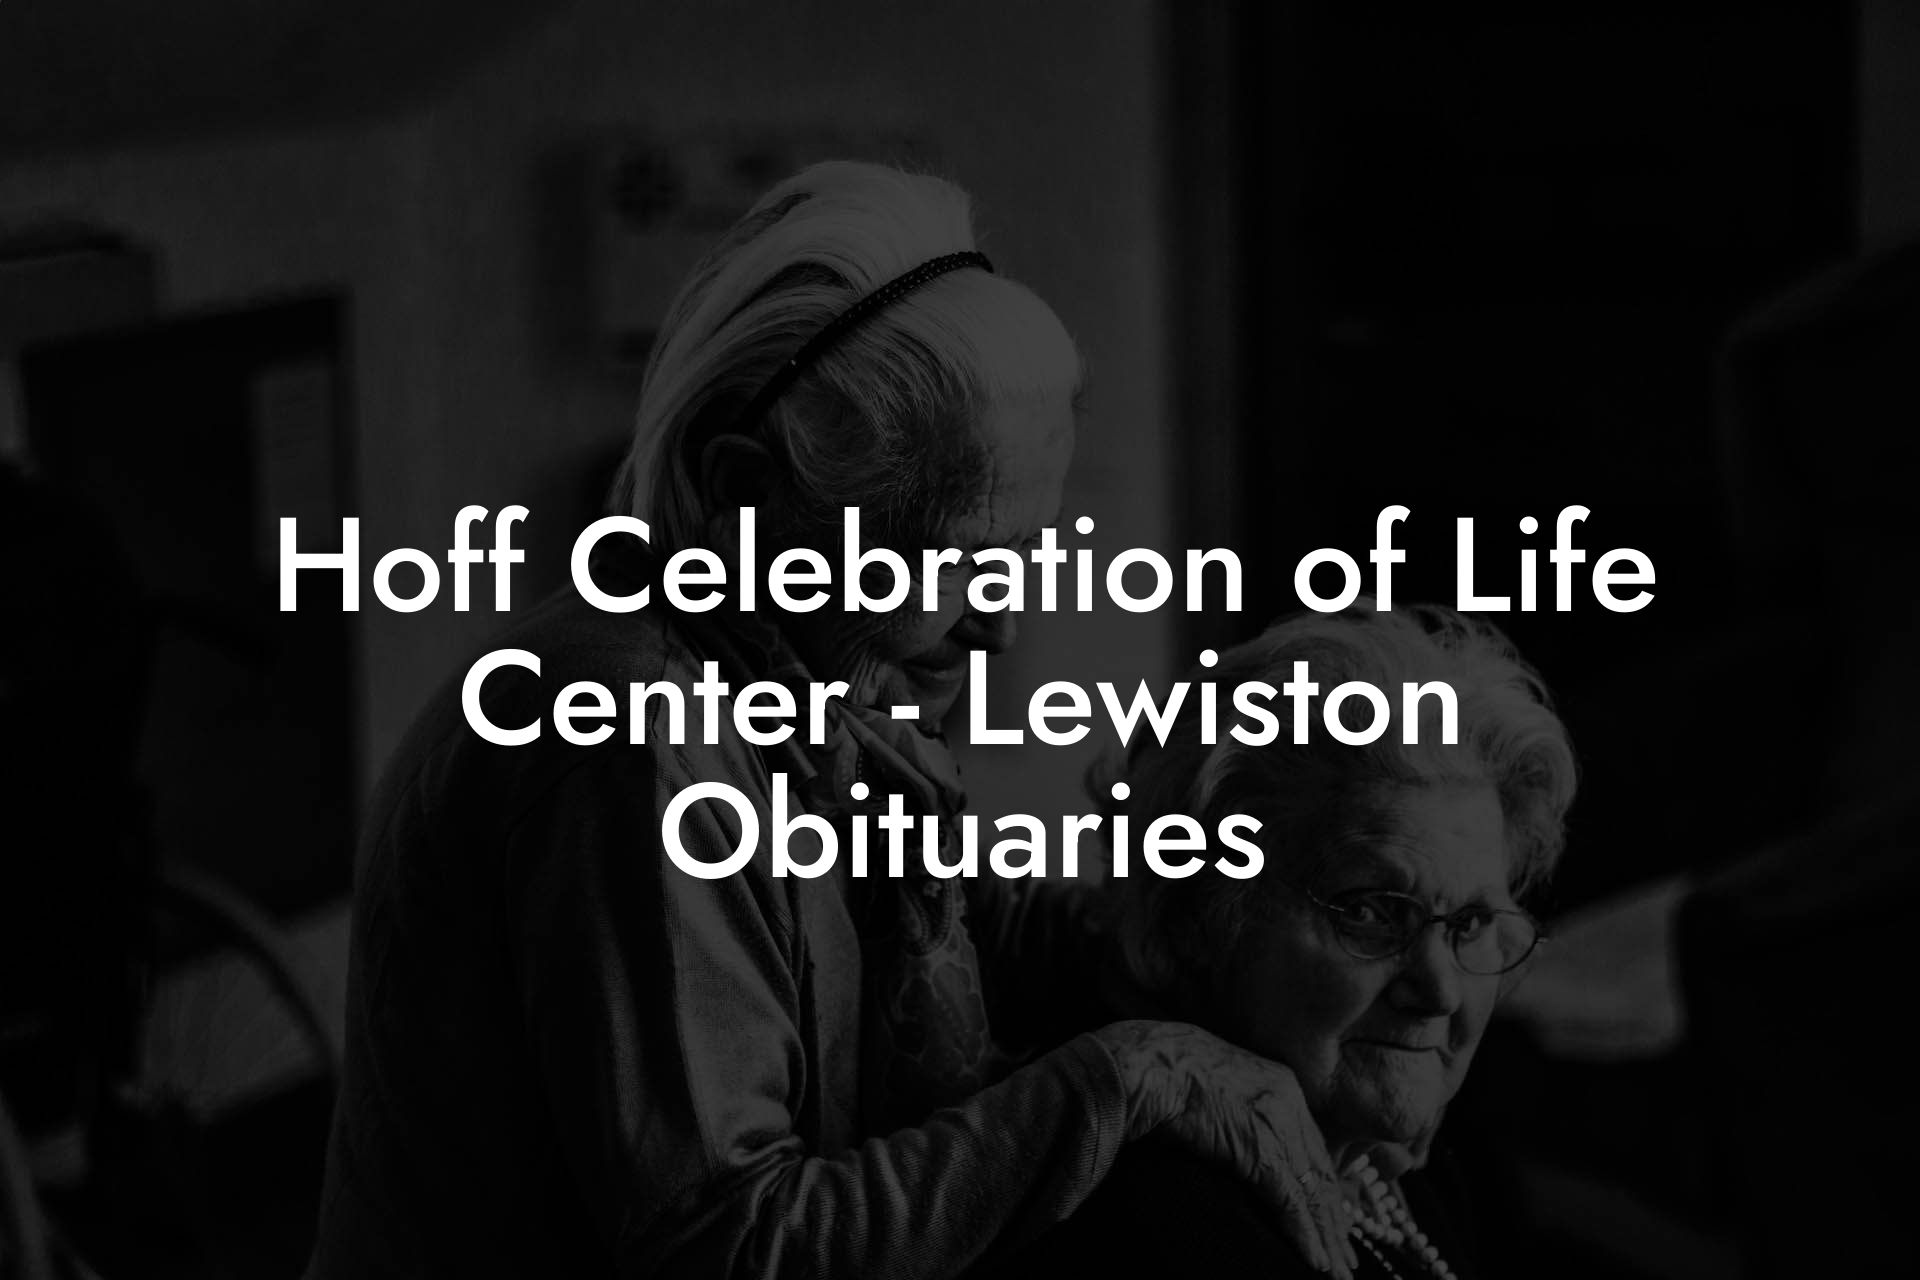 Hoff Celebration of Life Center - Lewiston Obituaries